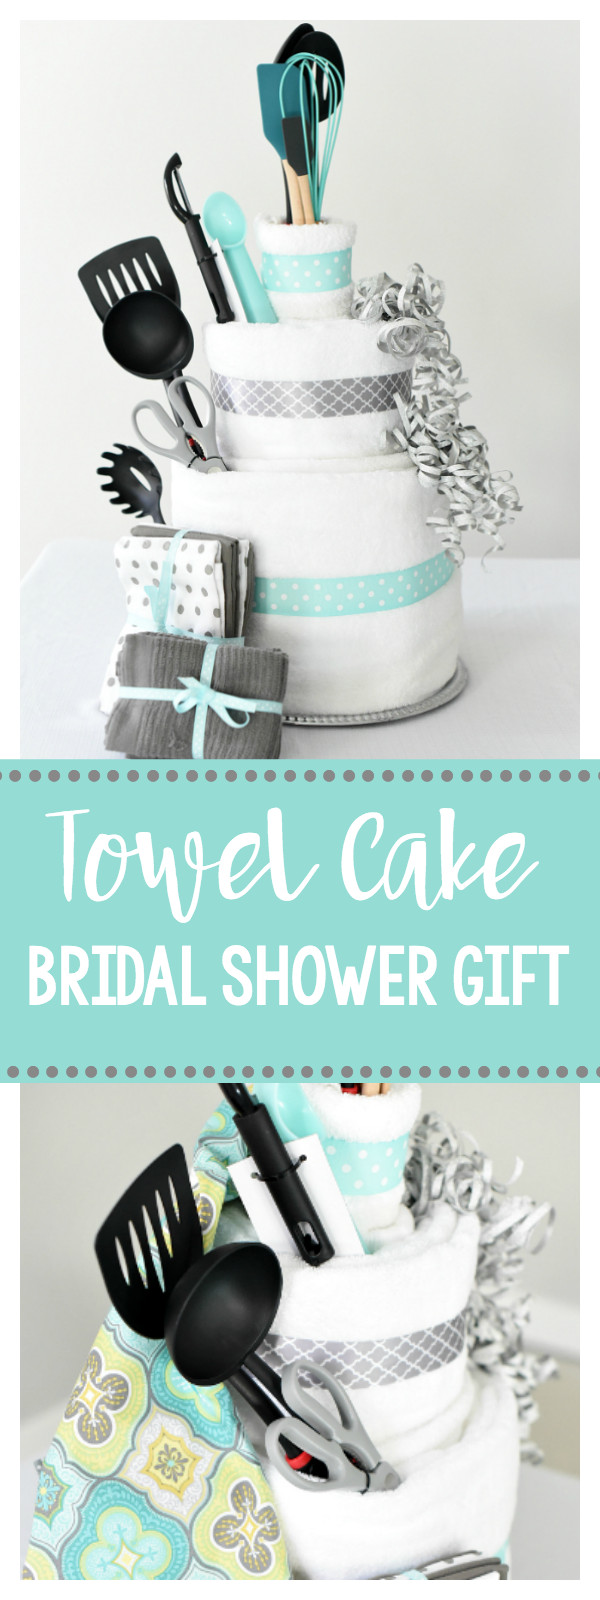 DIY Bridal Shower Gifts
 Towel Cake A Fun DIY Bridal Shower Gift – Fun Squared